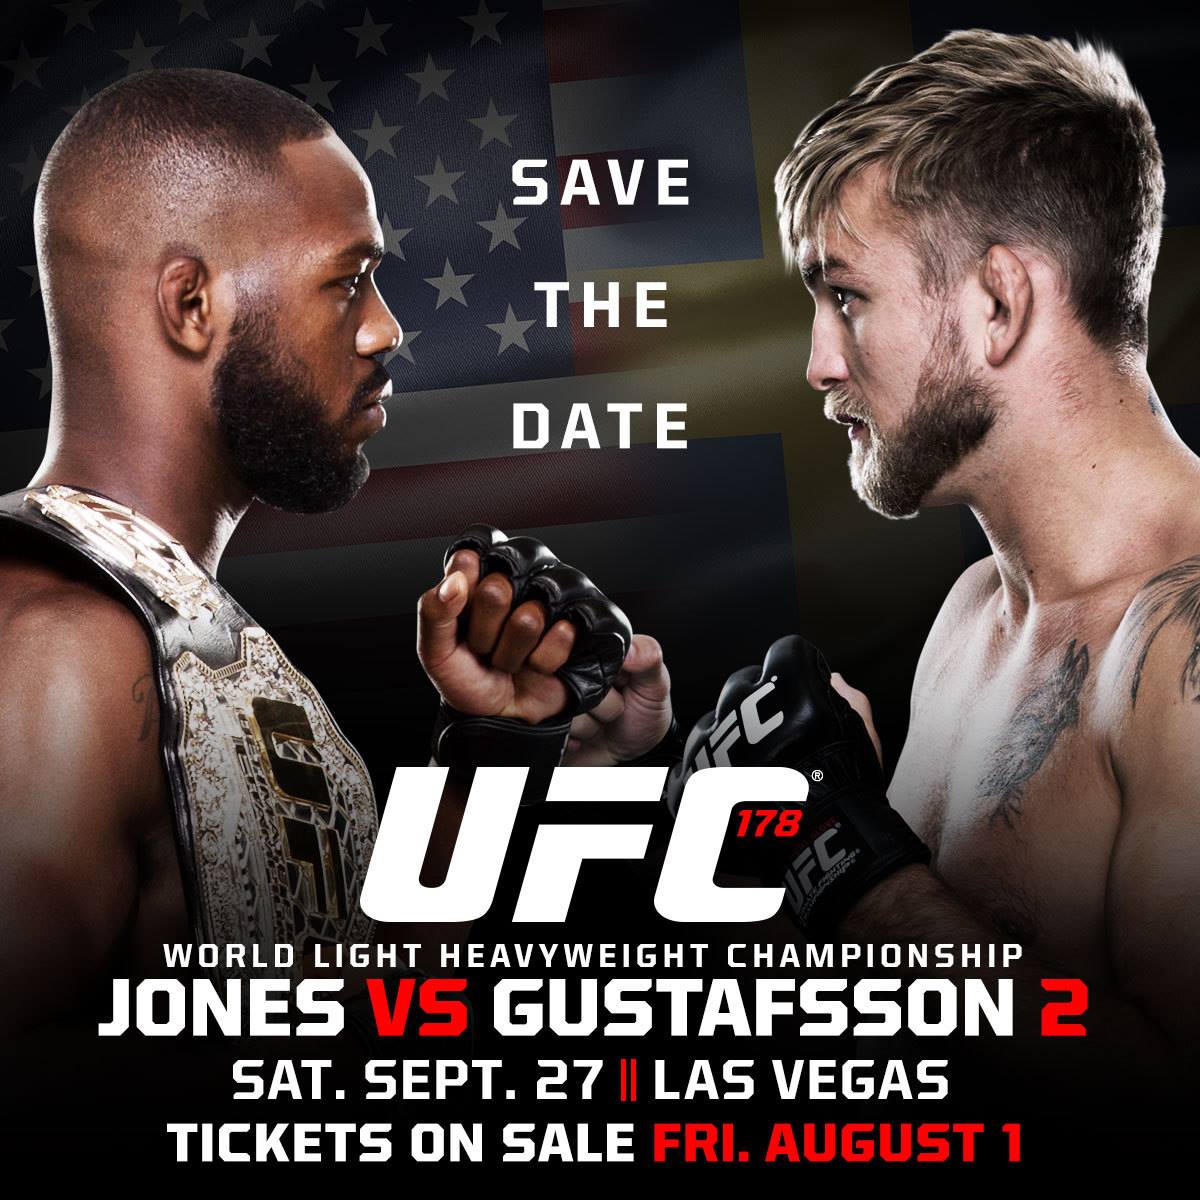 The MGM Grand in Las Vegas Will Host UFC 178: Jones vs Gustafsson 2